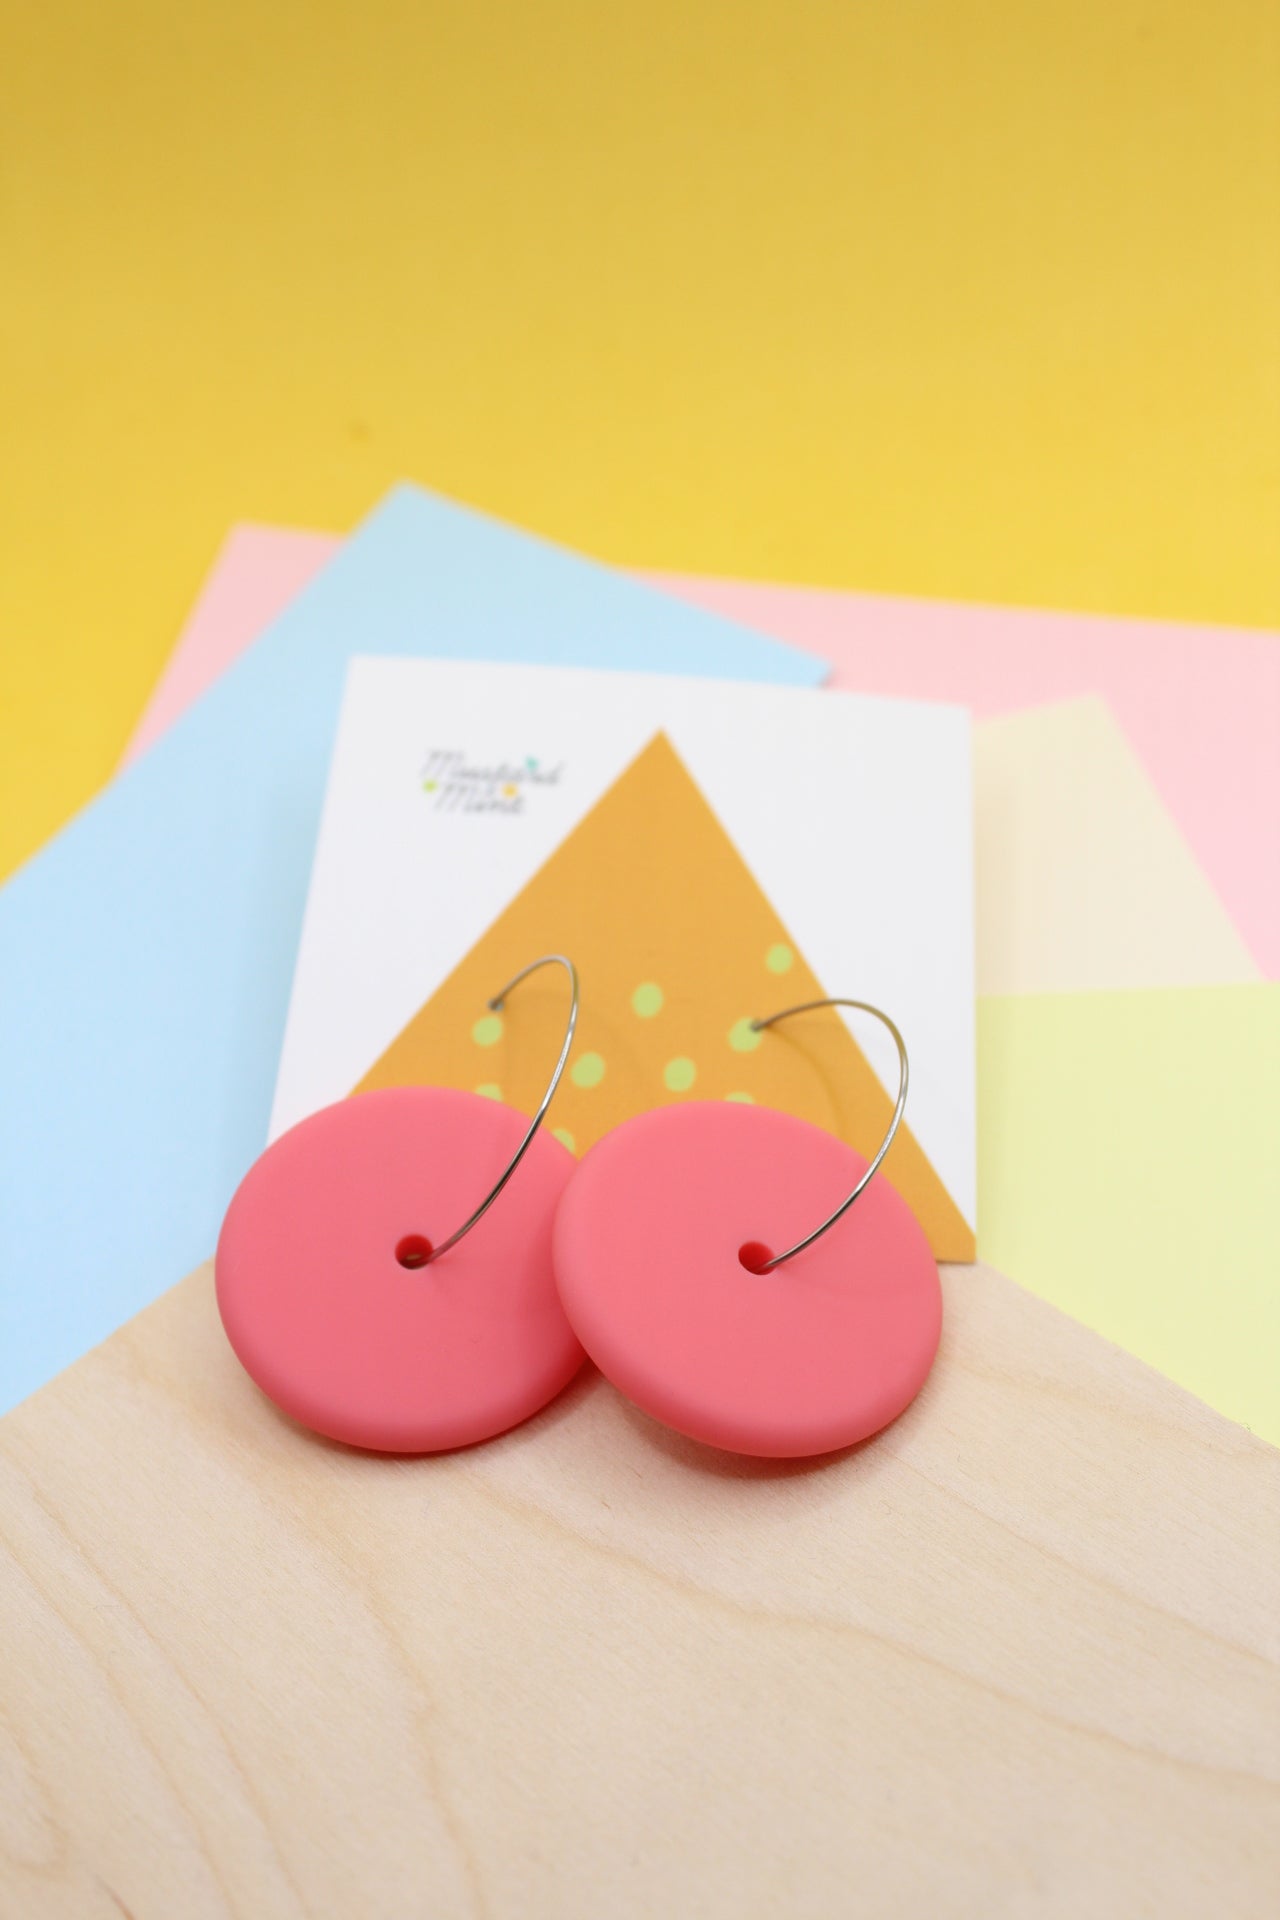 Statement Silicone Hoop Dangle Earrings - Flamingo Pink, 30mm Hoops.